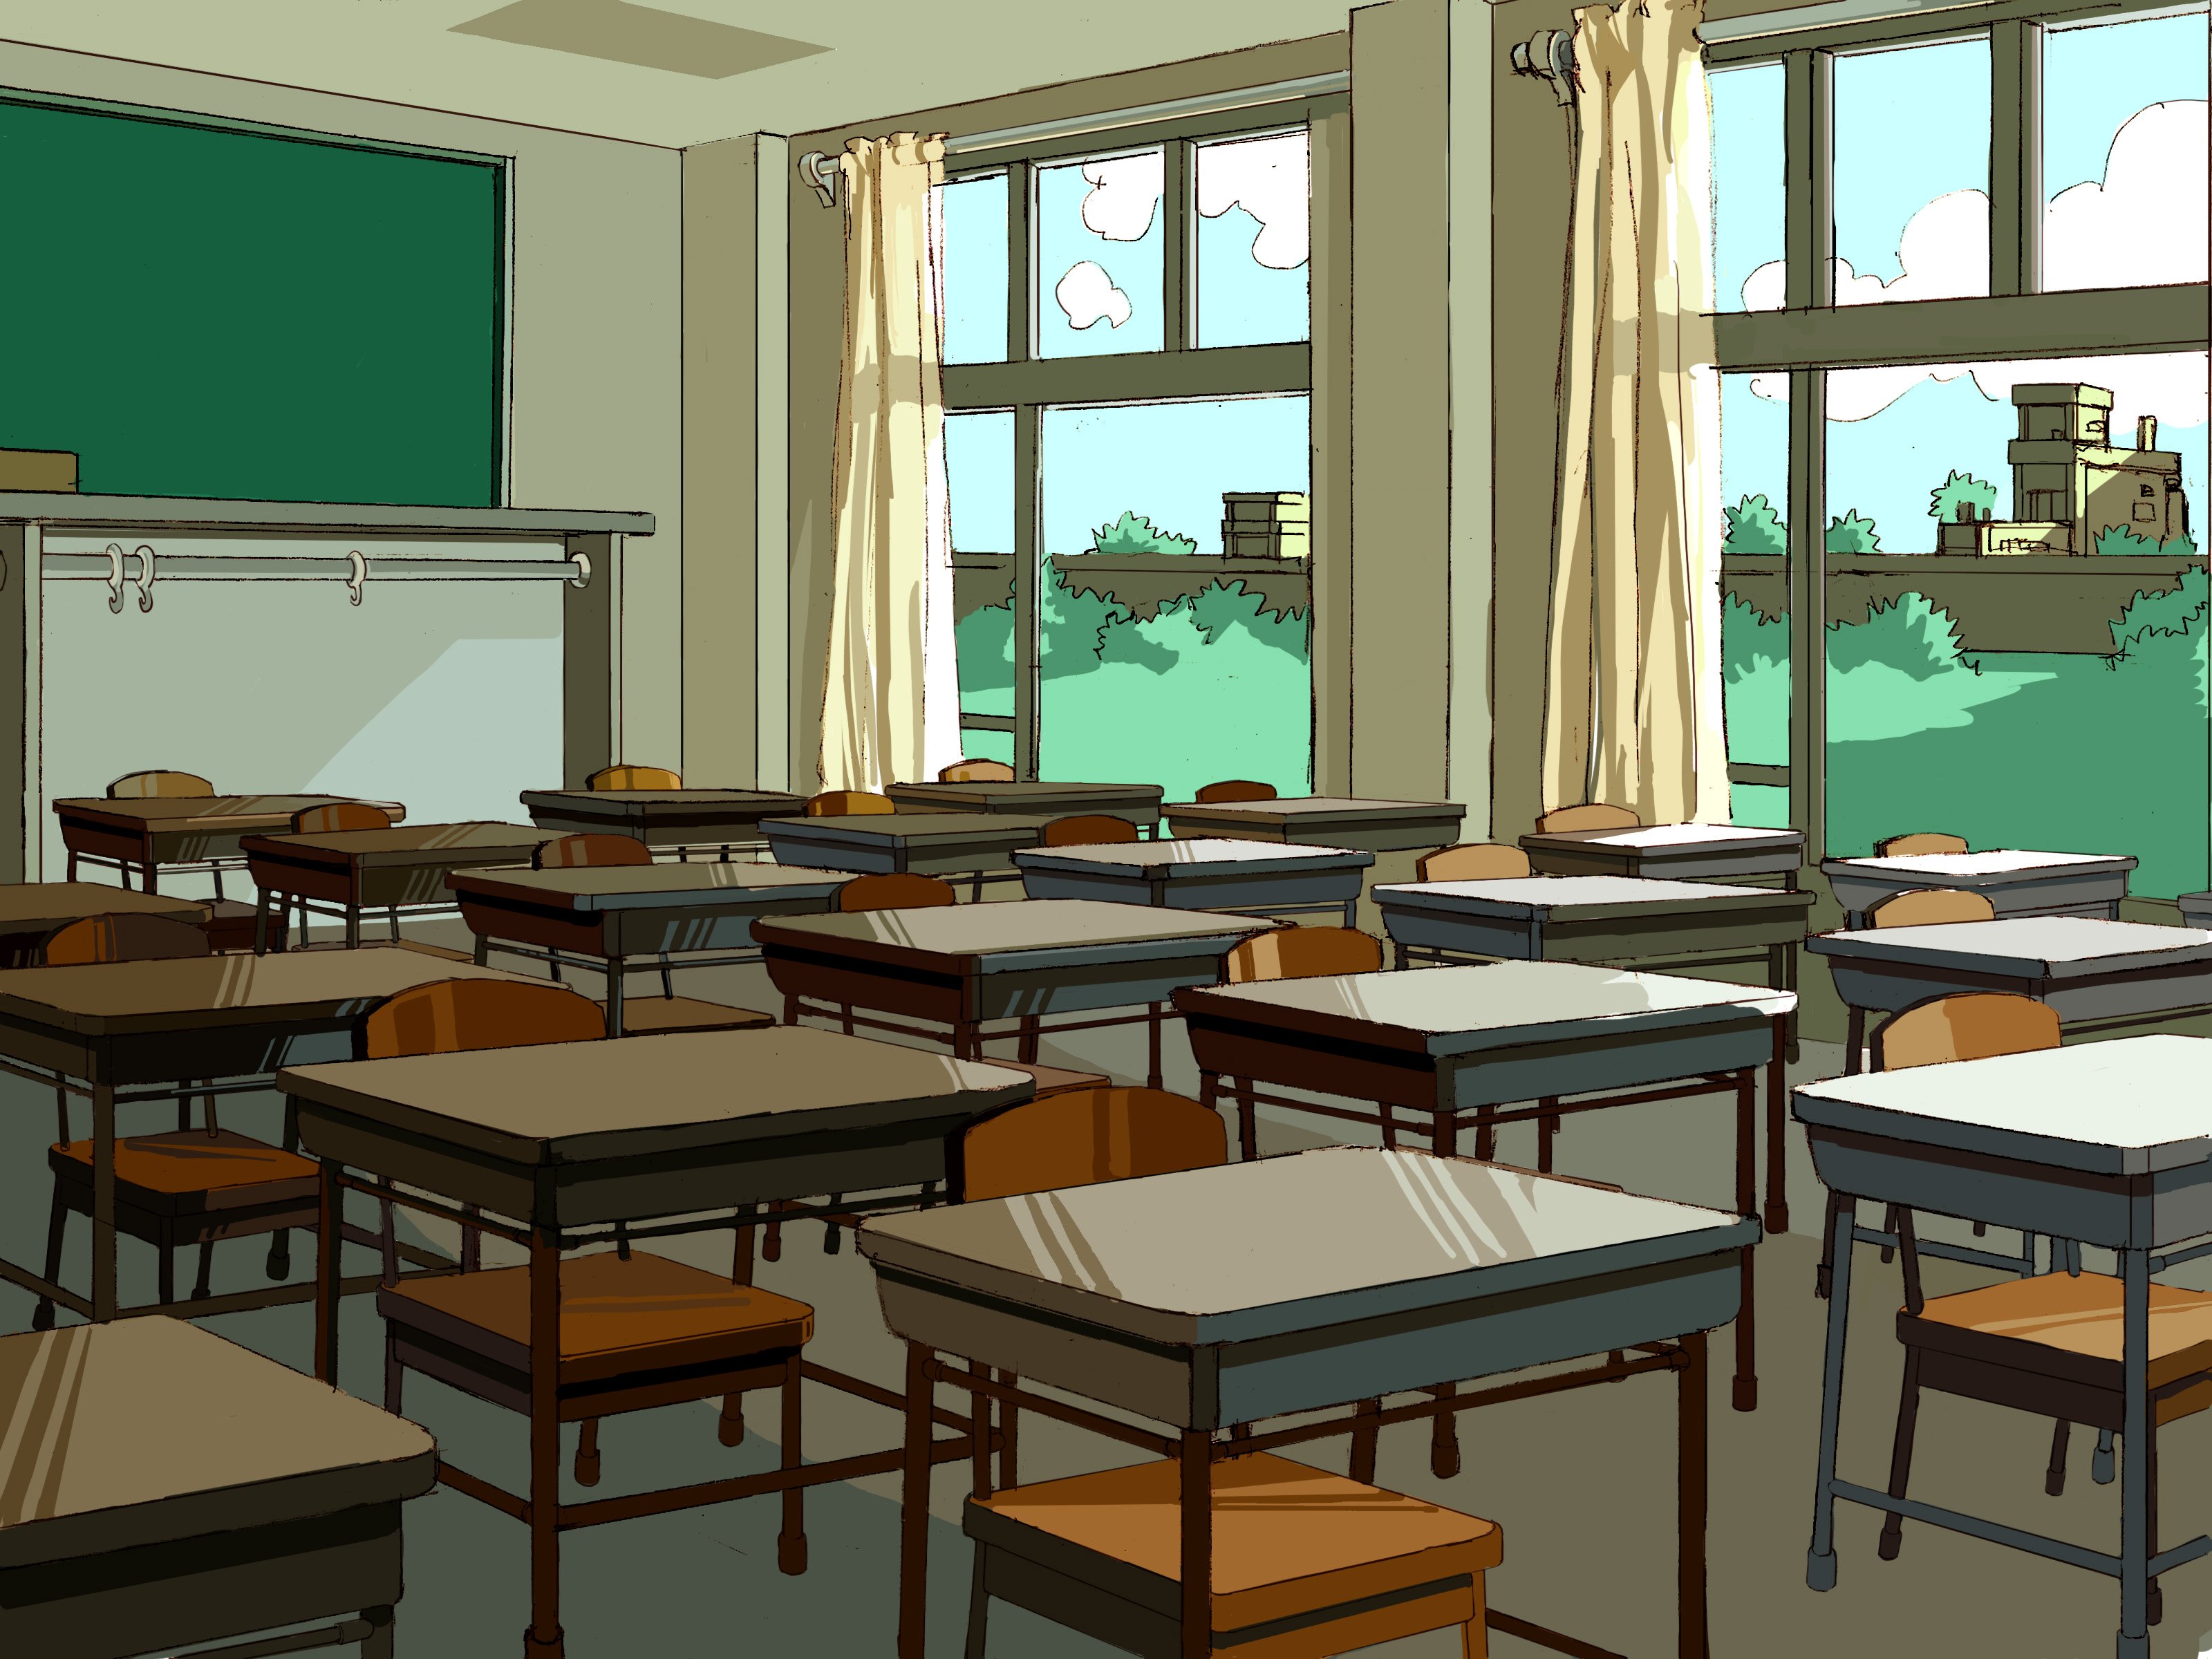 Anime Classroom by SeventhTale on DeviantArt